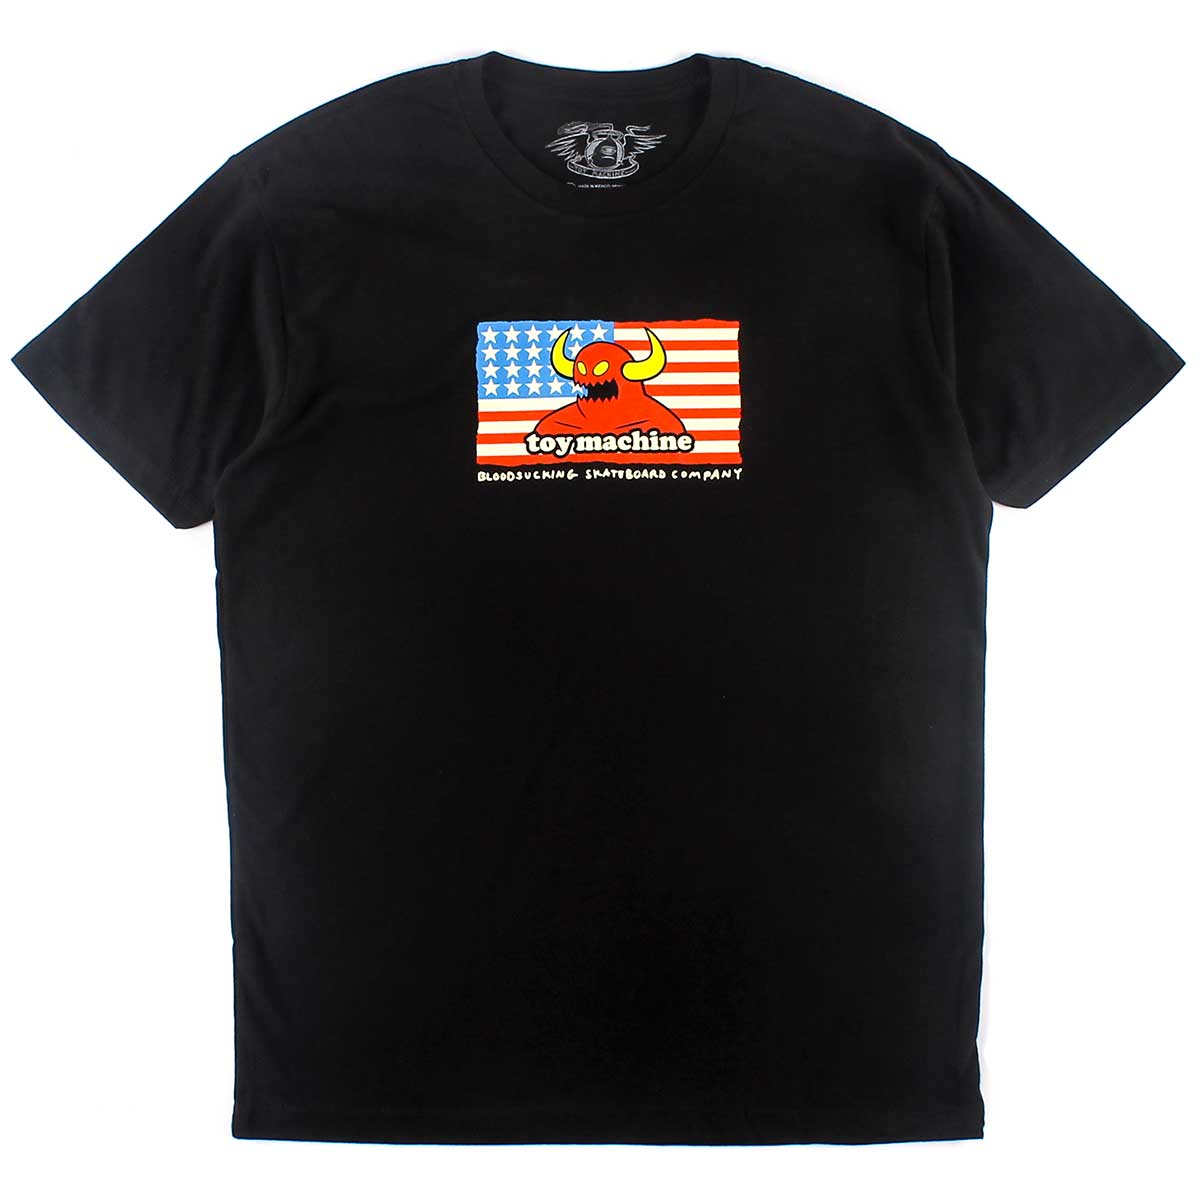 https://socalskateshop.com/mm5/graphics/00000001/27/ToyMachine_AmericanMonster_Shirt_Black_F.jpg